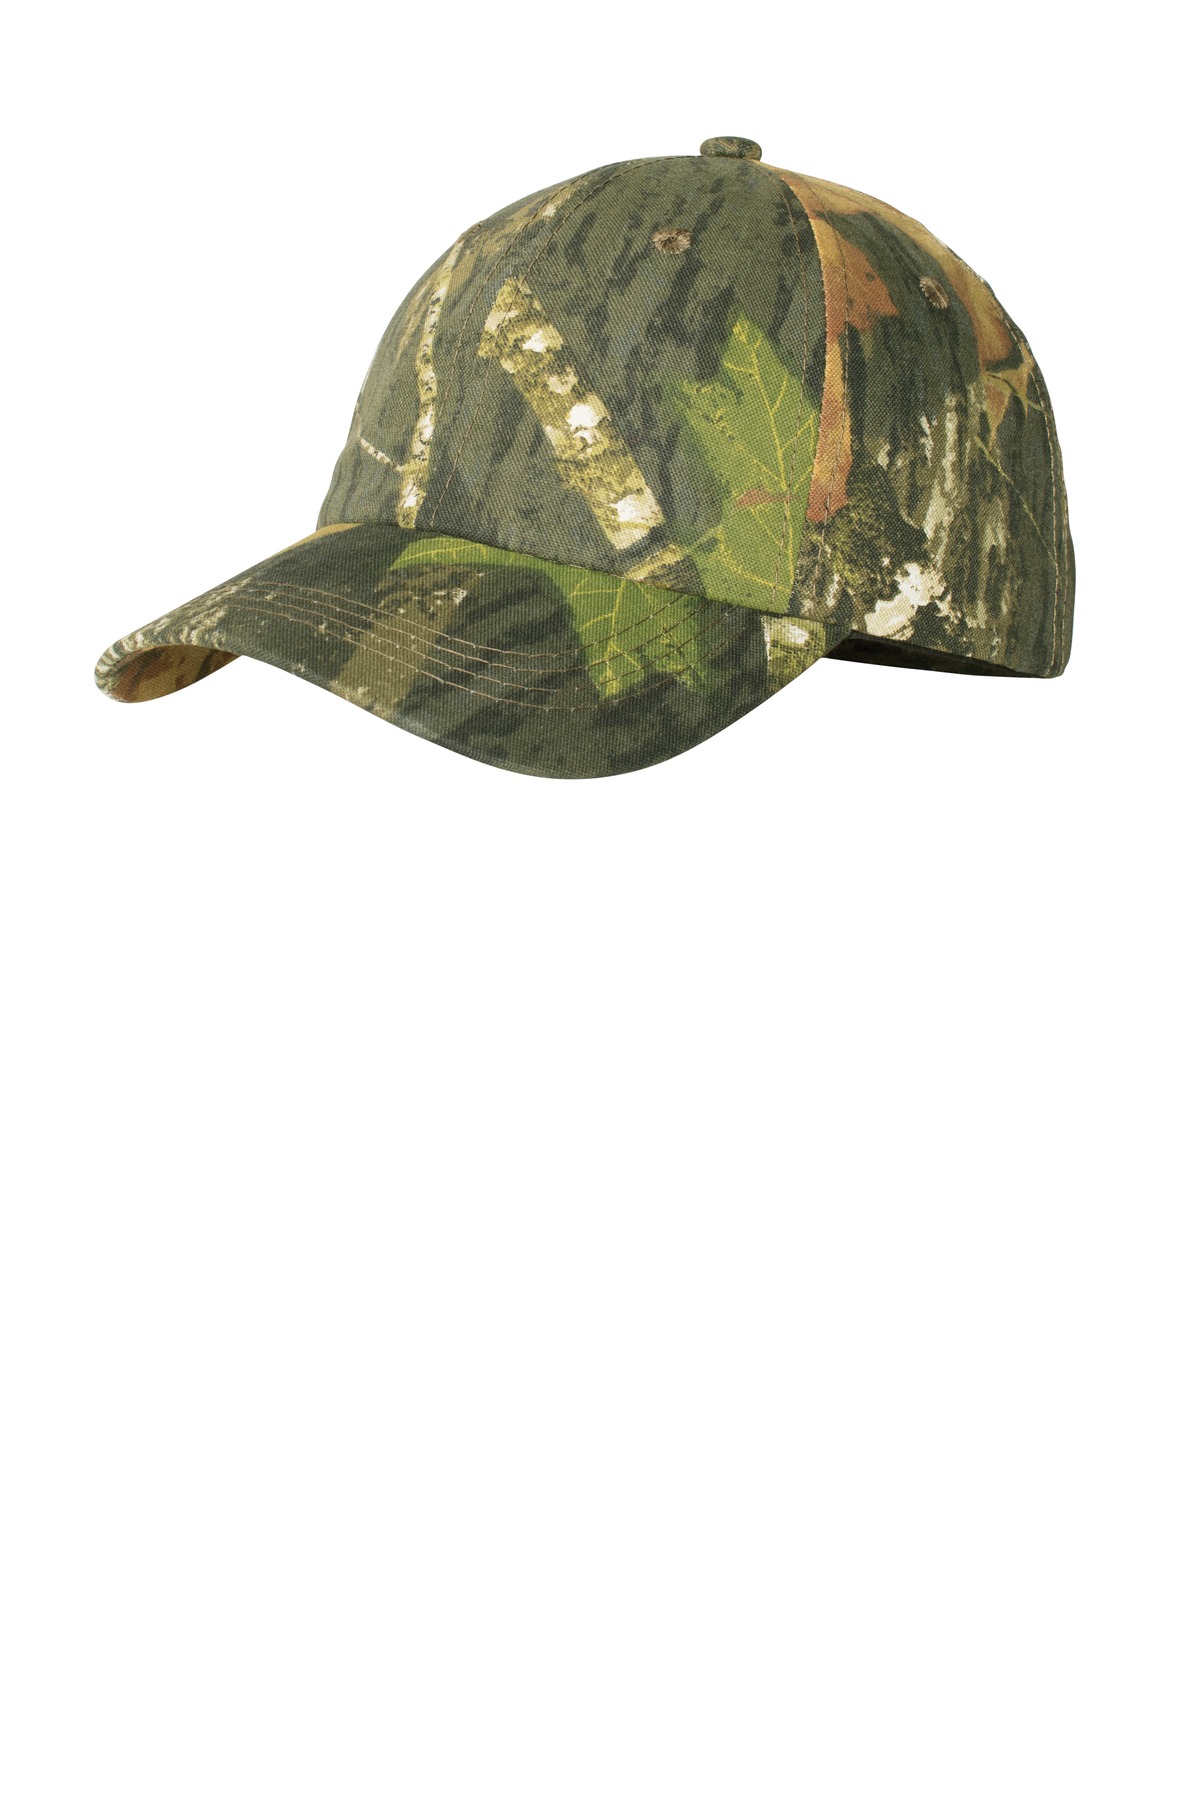 Port Authority Hospitality Caps ® Pro Camouflage Series Garment-Washed Cap.-Port Authority